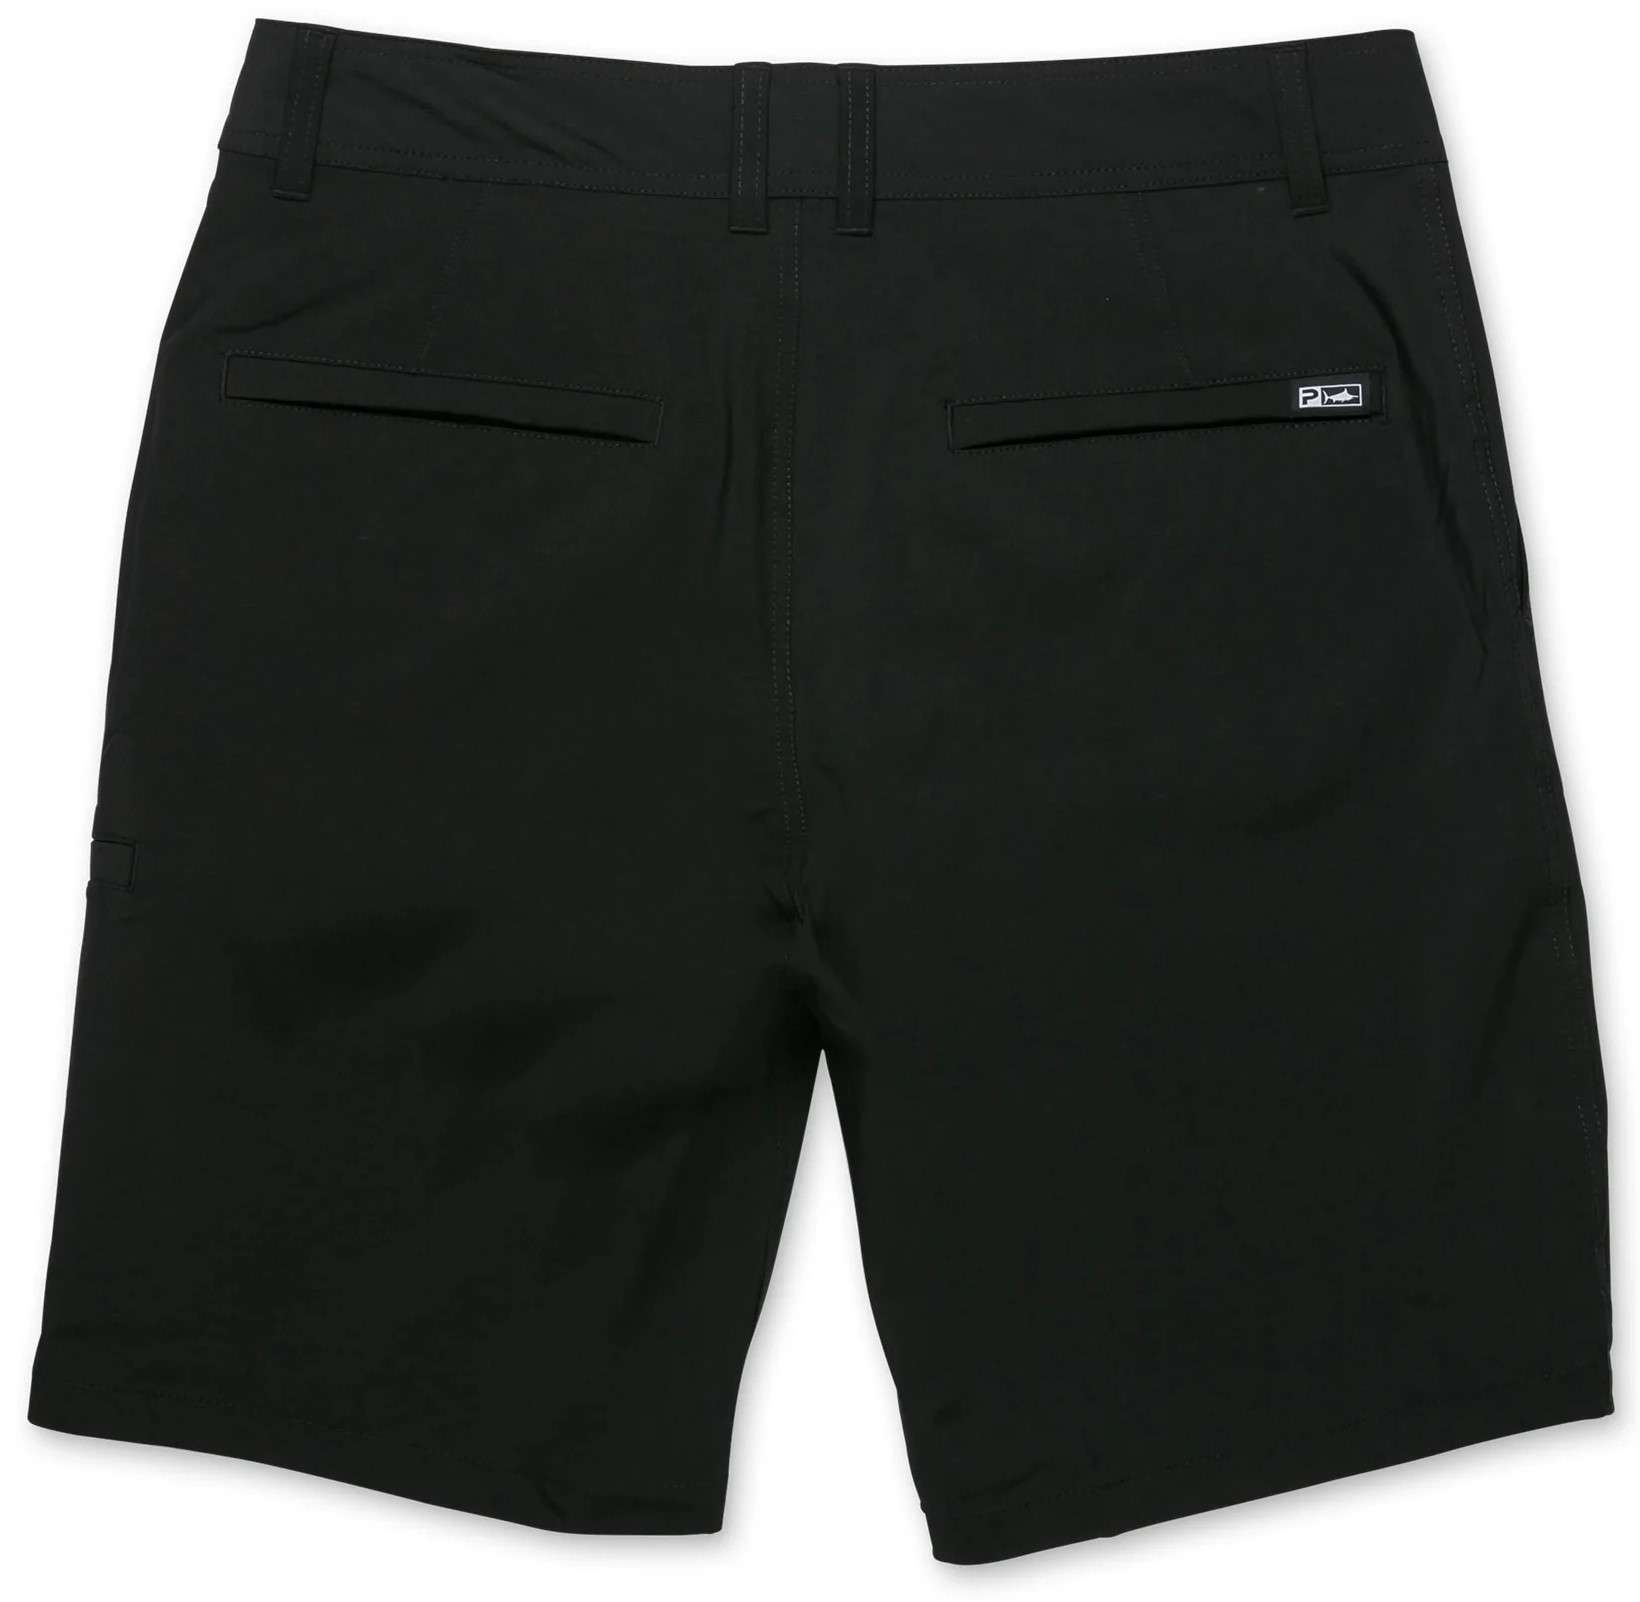 Pelagic Mako Hybrid Fishing Shorts - Black - 34